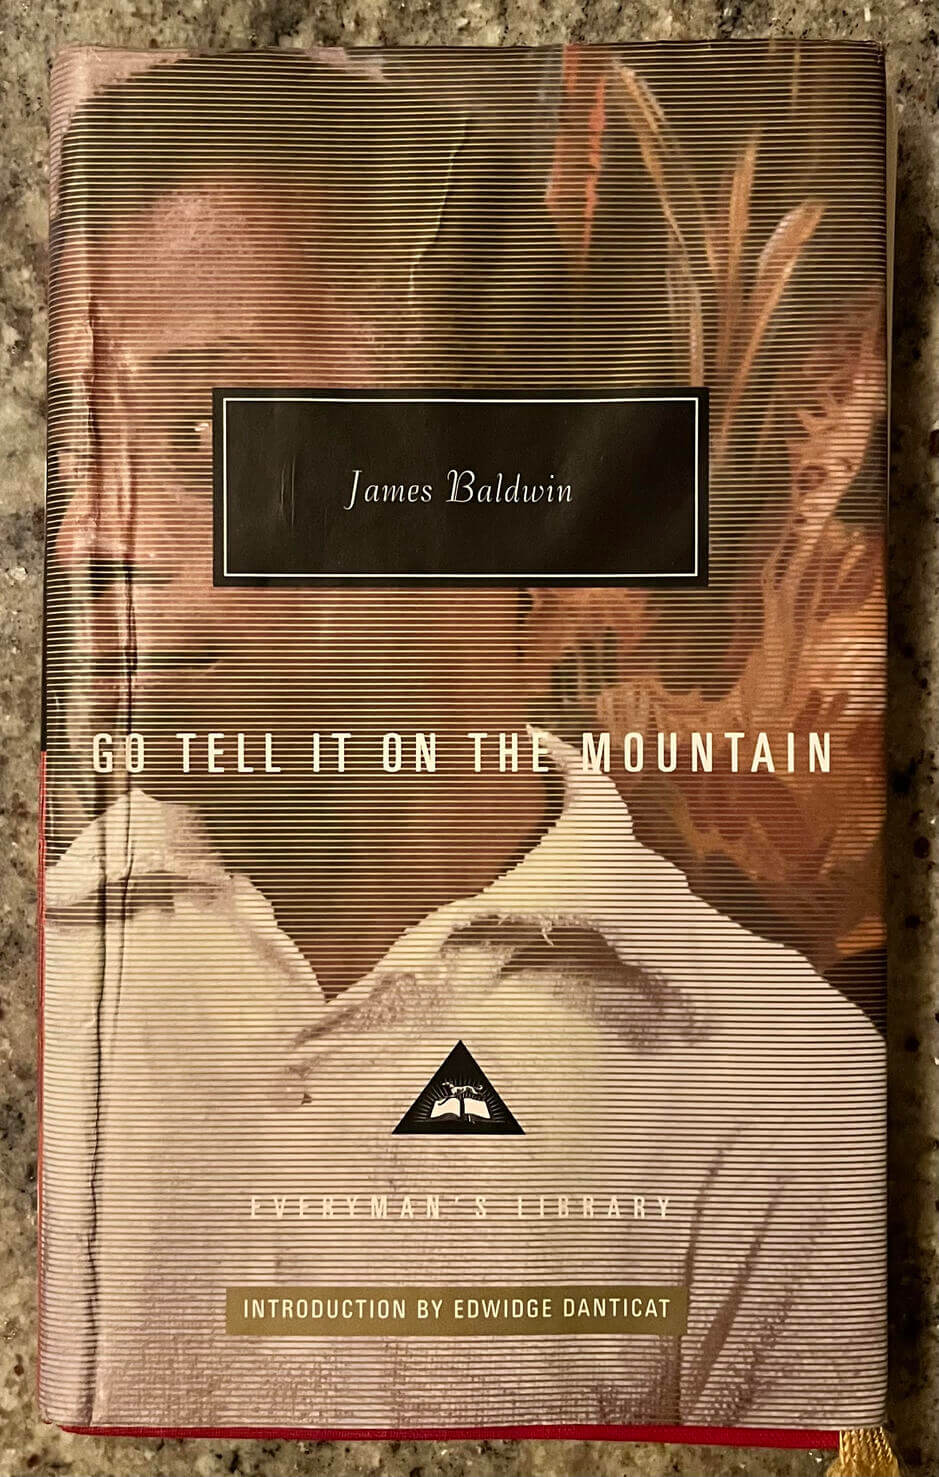 “Go Tell it on the Mountain” by James Baldwin. Introduction by Edwidge Danticat.